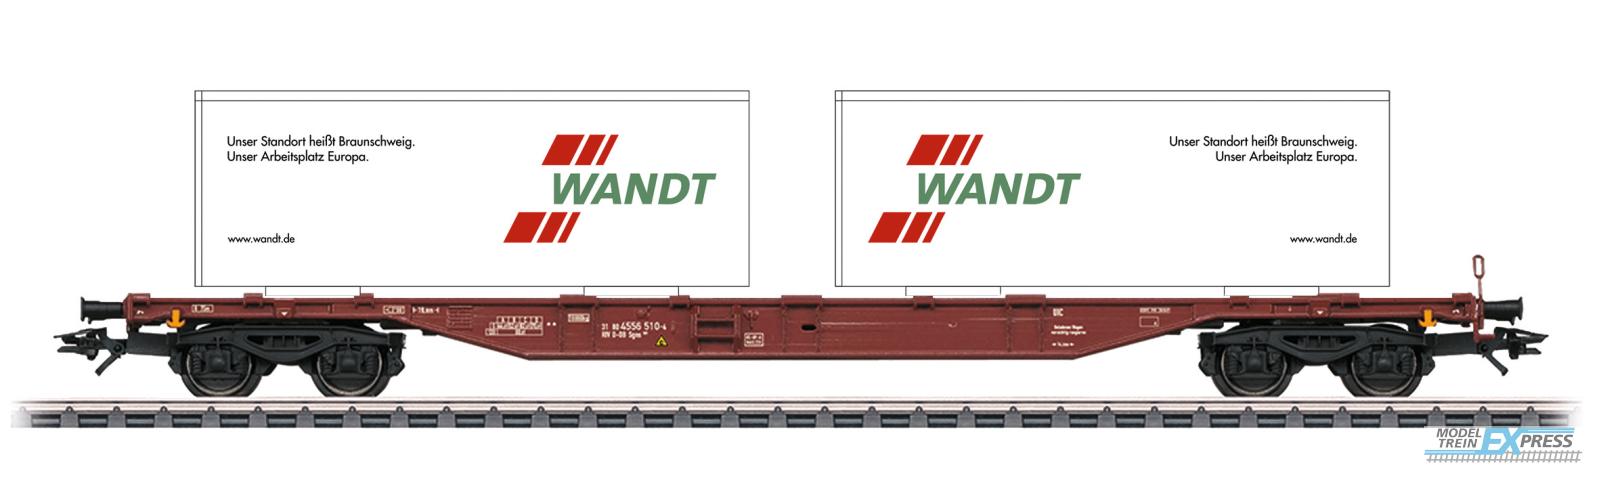 Wilde13 94492 Marklin Containertragwagen Sgns691, DBAG, Ep.VI, rot-braun, 'Wandt'